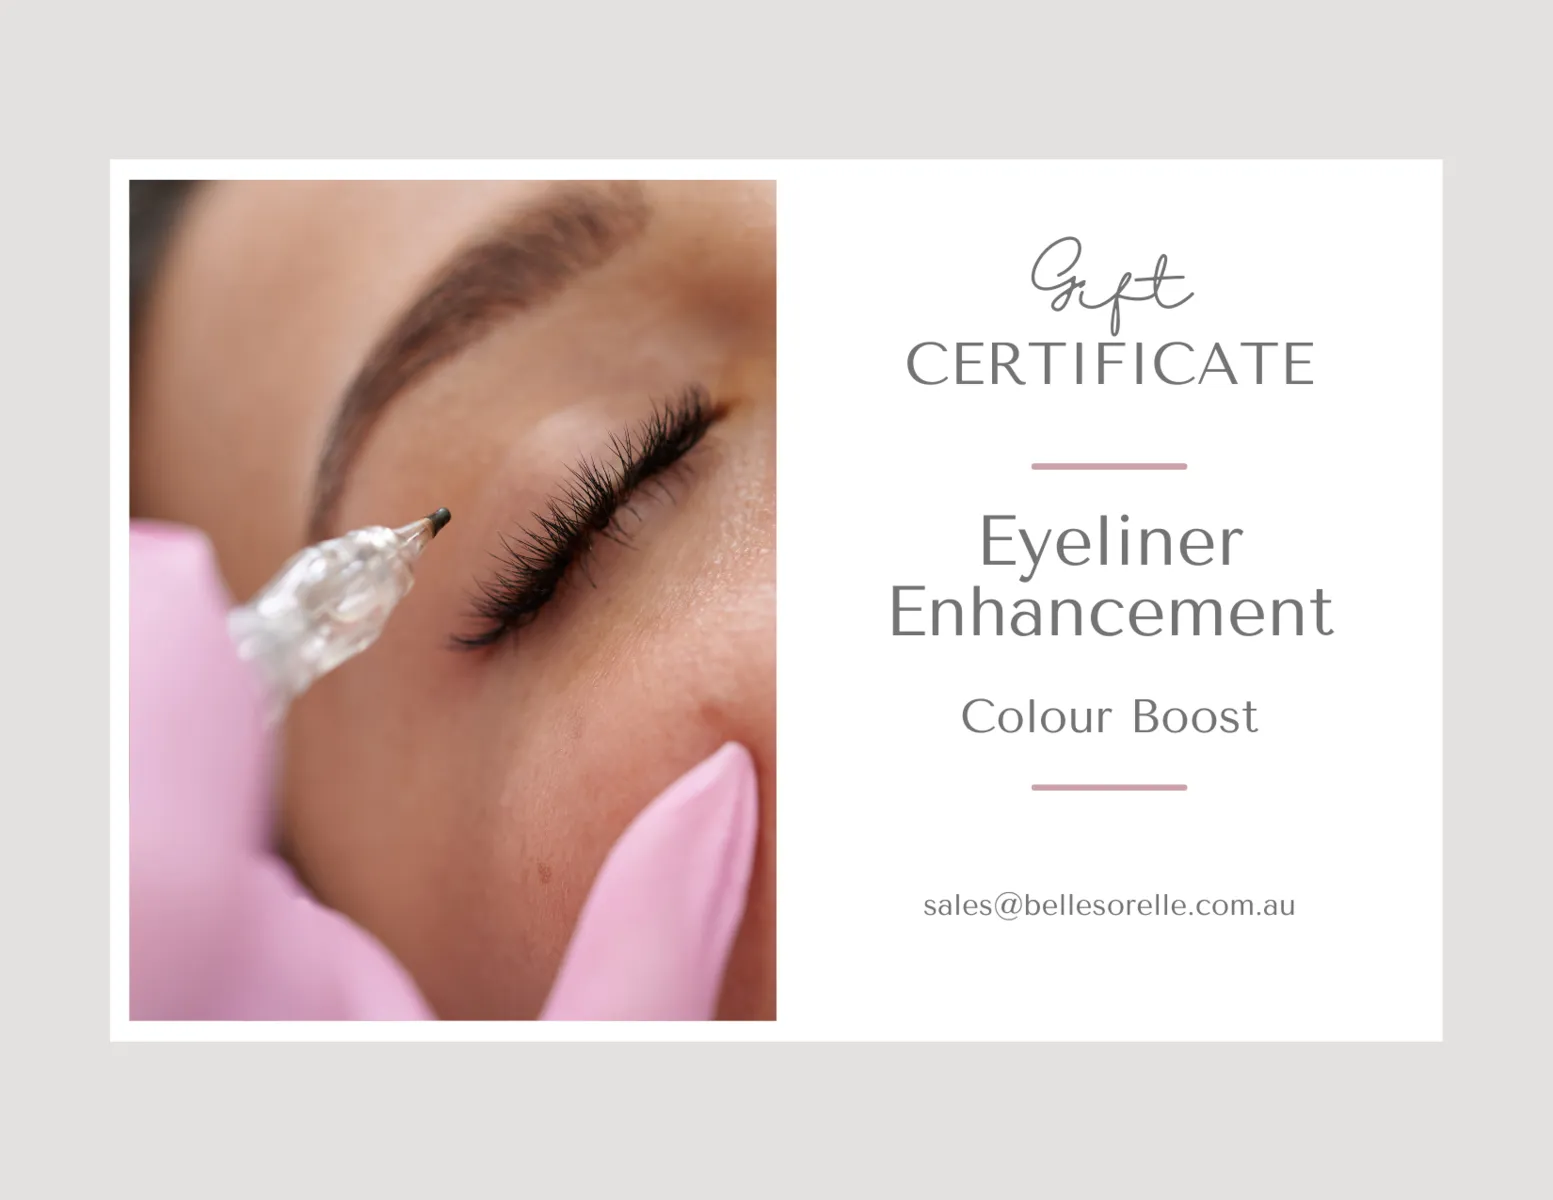 Eyeliner Enhancement - Colour Boost